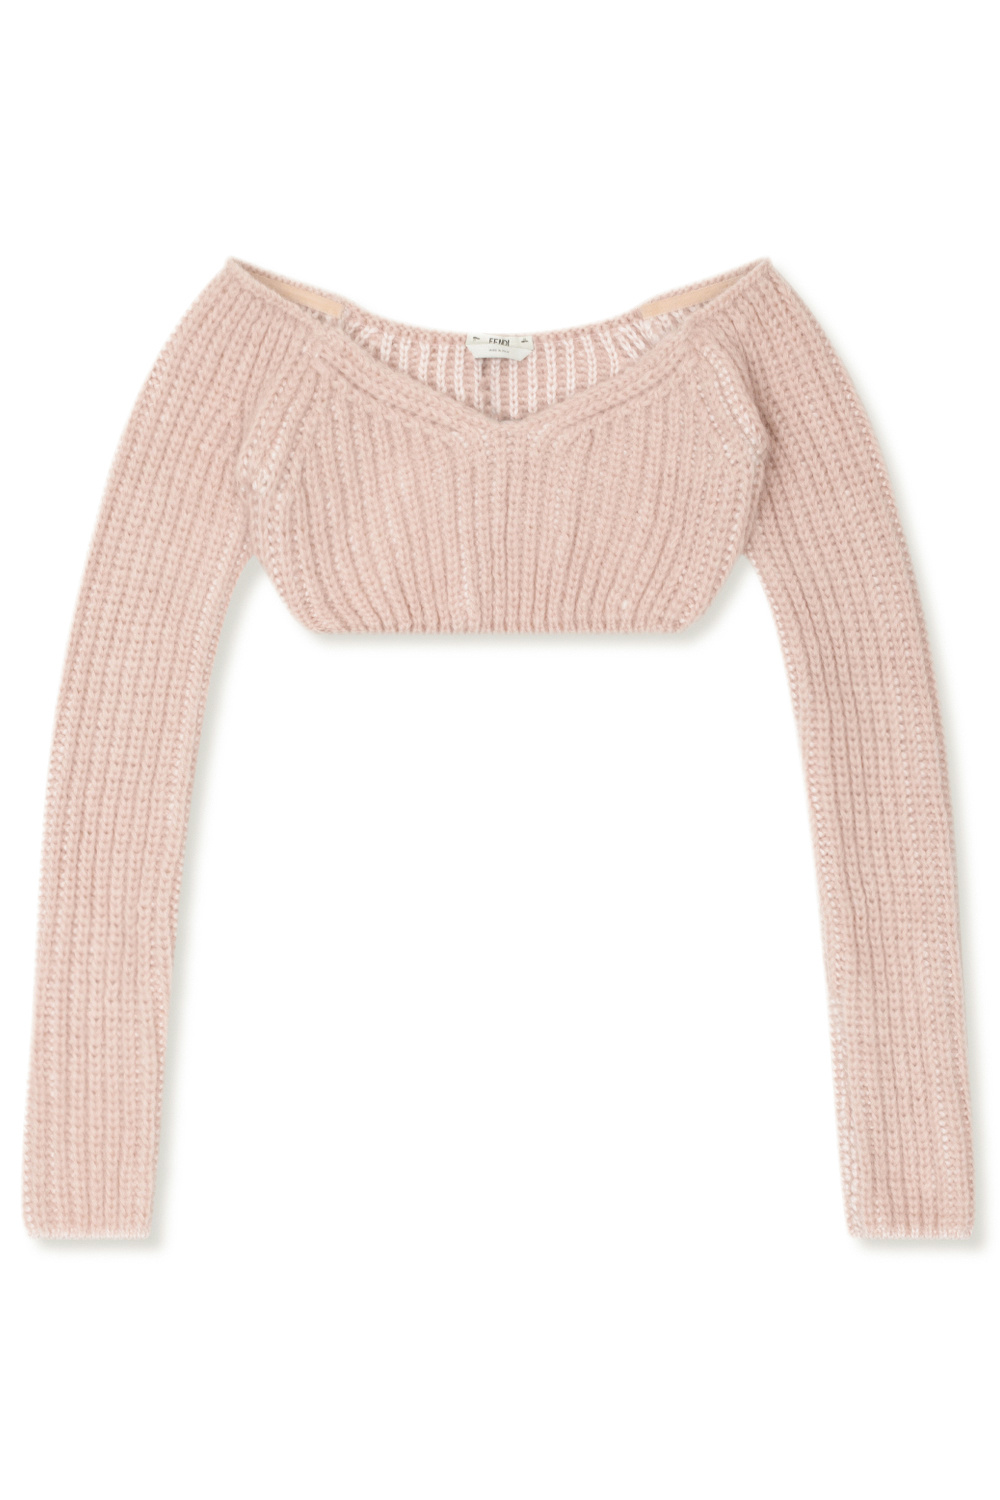 Fendi Cropped sweater